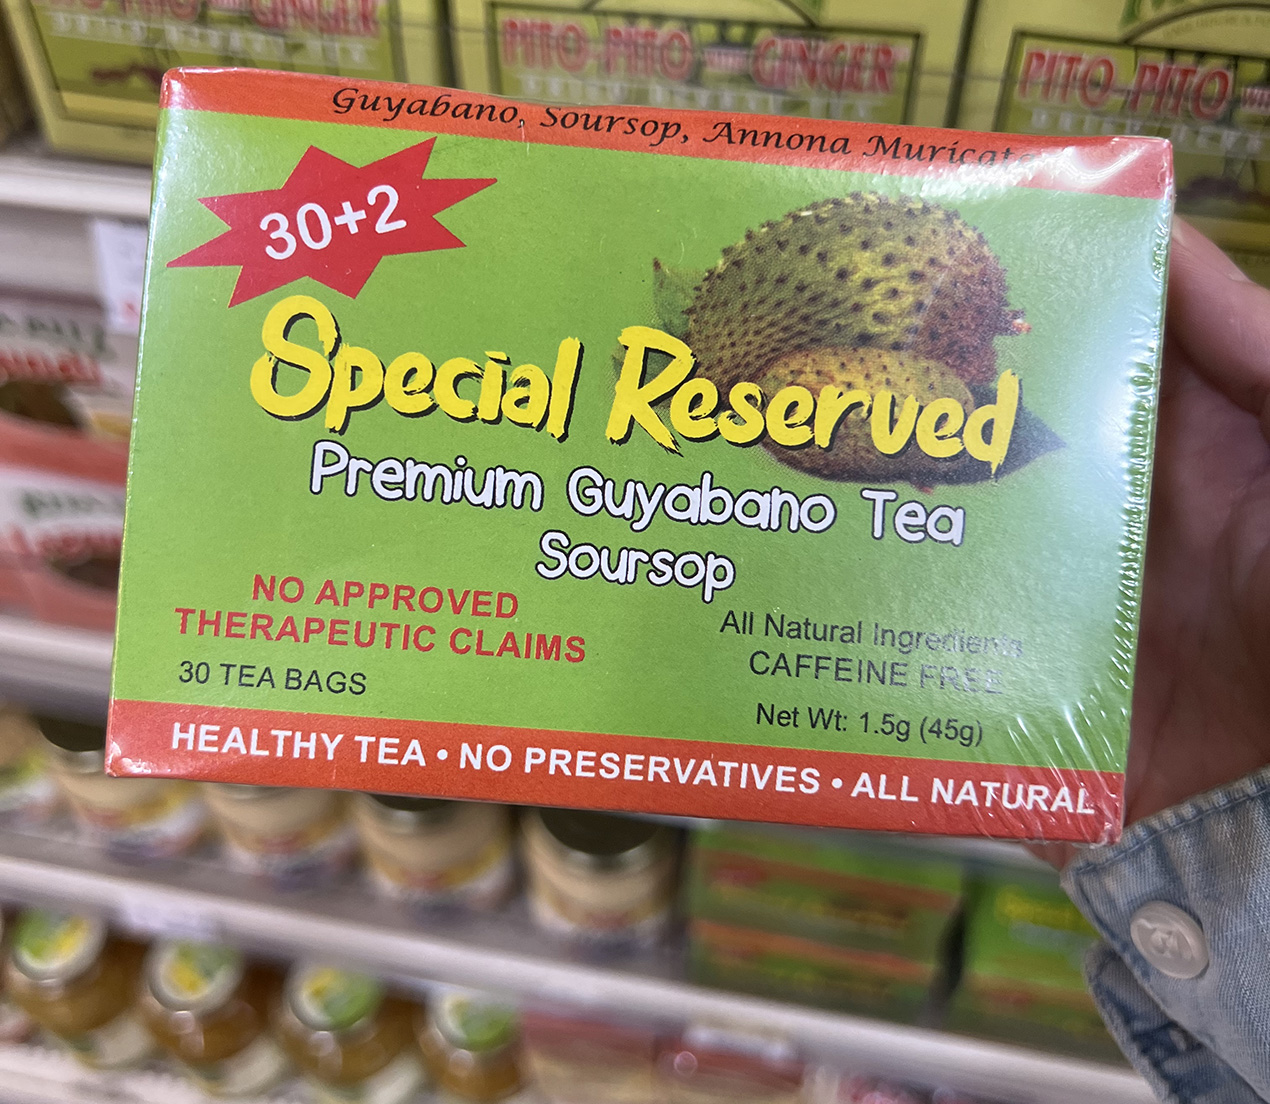 Premium guyabano tea soursop - Seafood City Supermarket in Irvine, California - Photo by Julie Nguyen